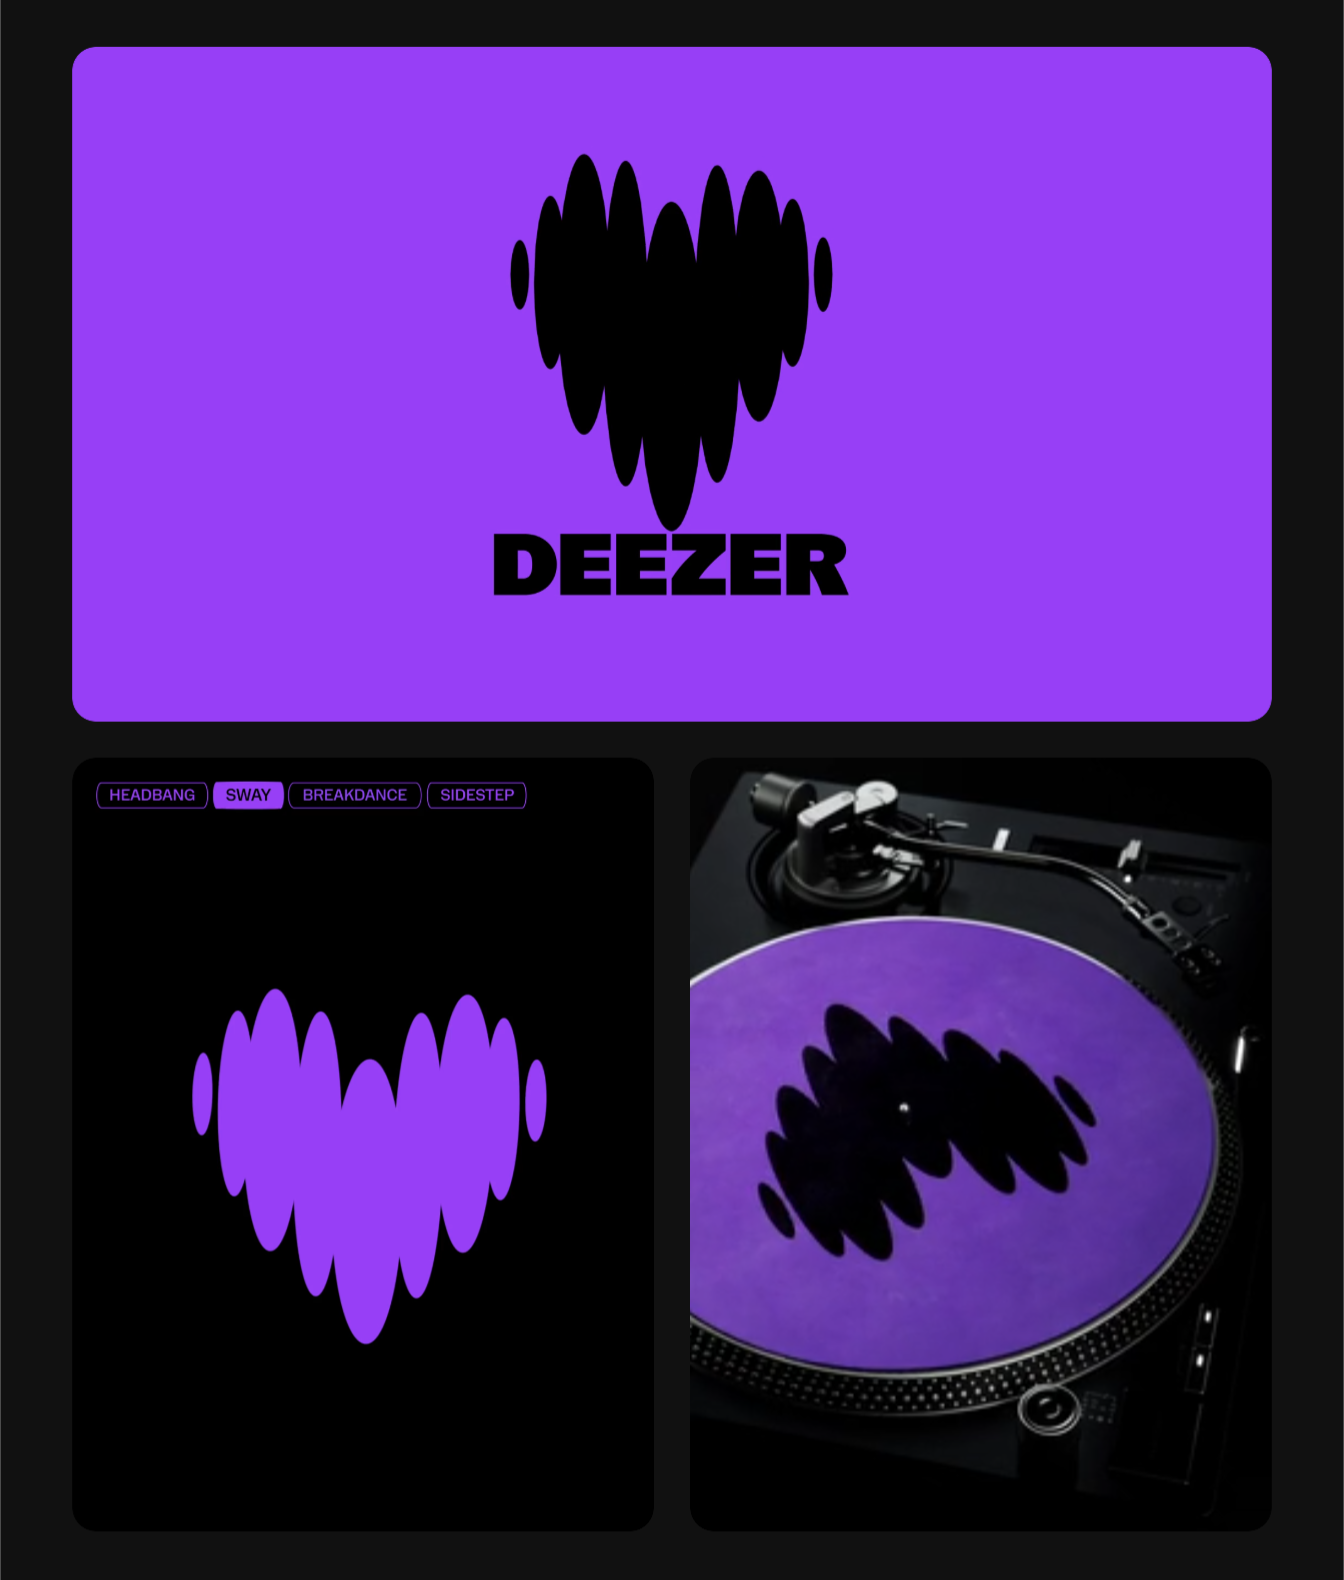 Deezer's Branding and Visual Identity Transformation